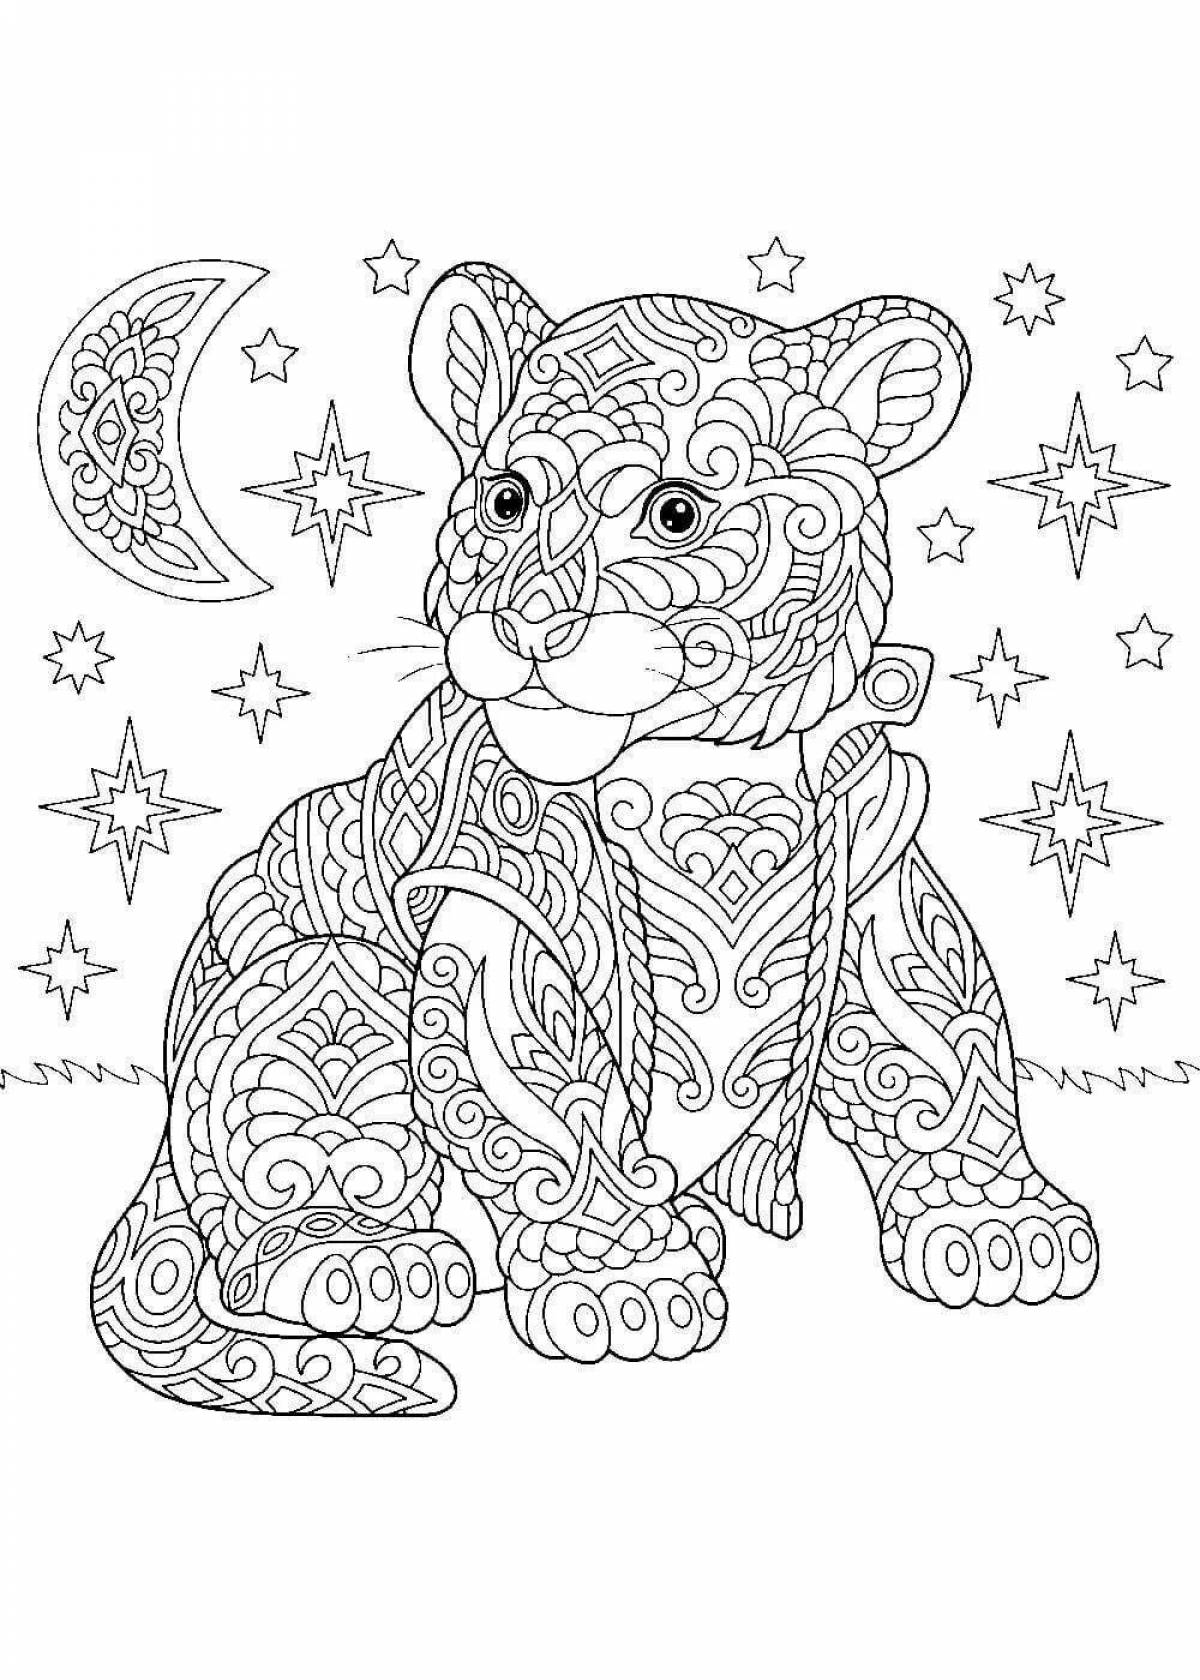 Fascinating coloring book antistress tiger cub